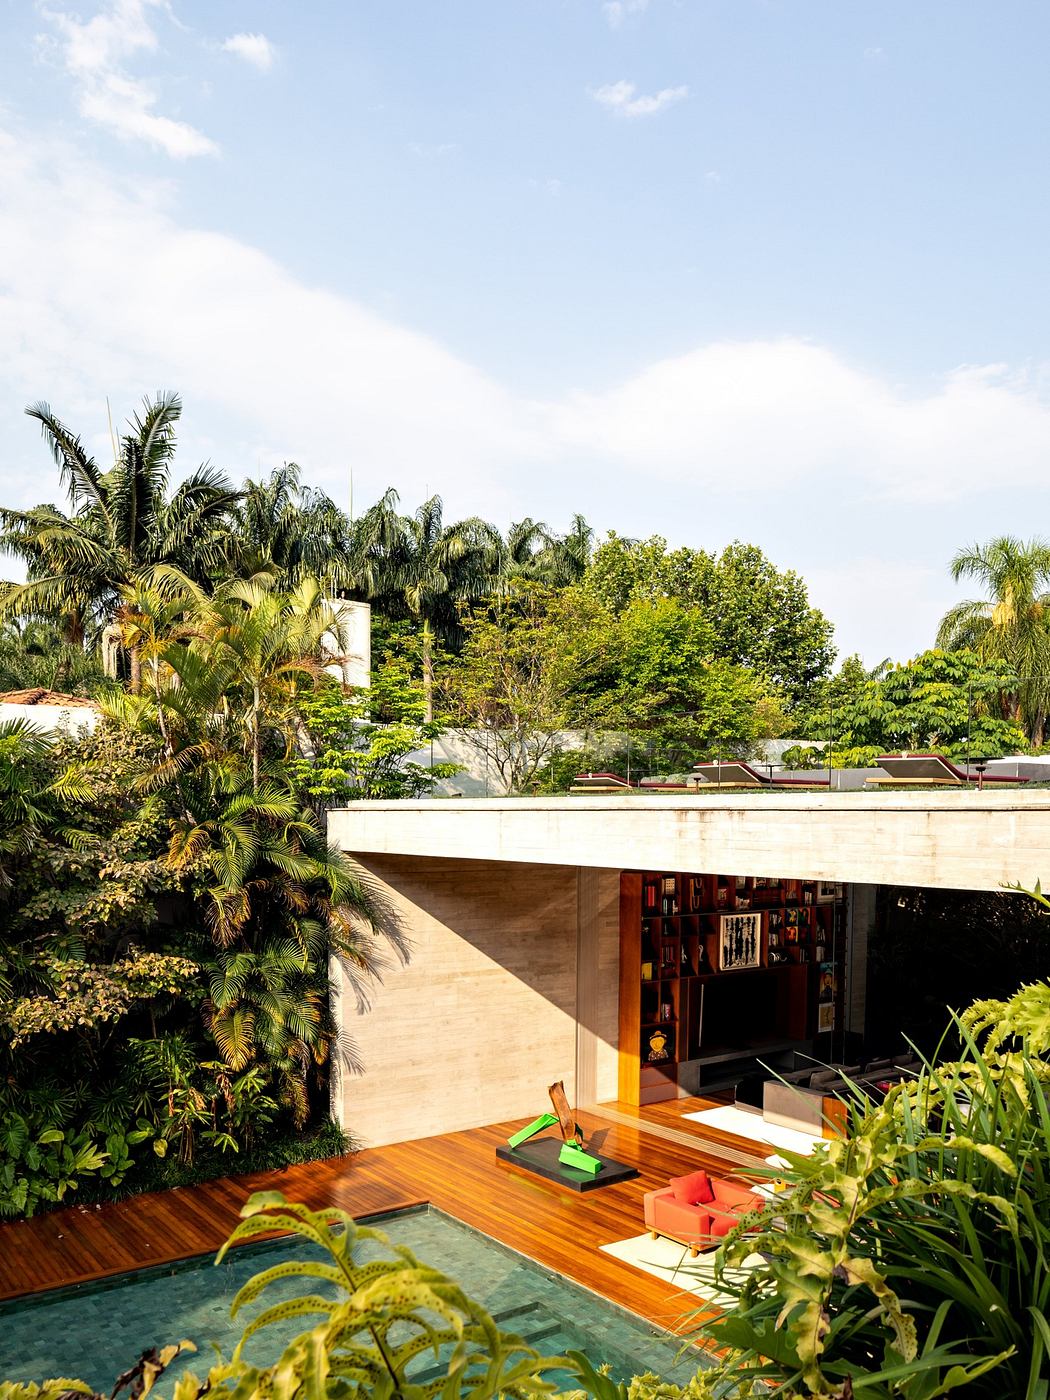 Contemporary house with lush garden and open patio.